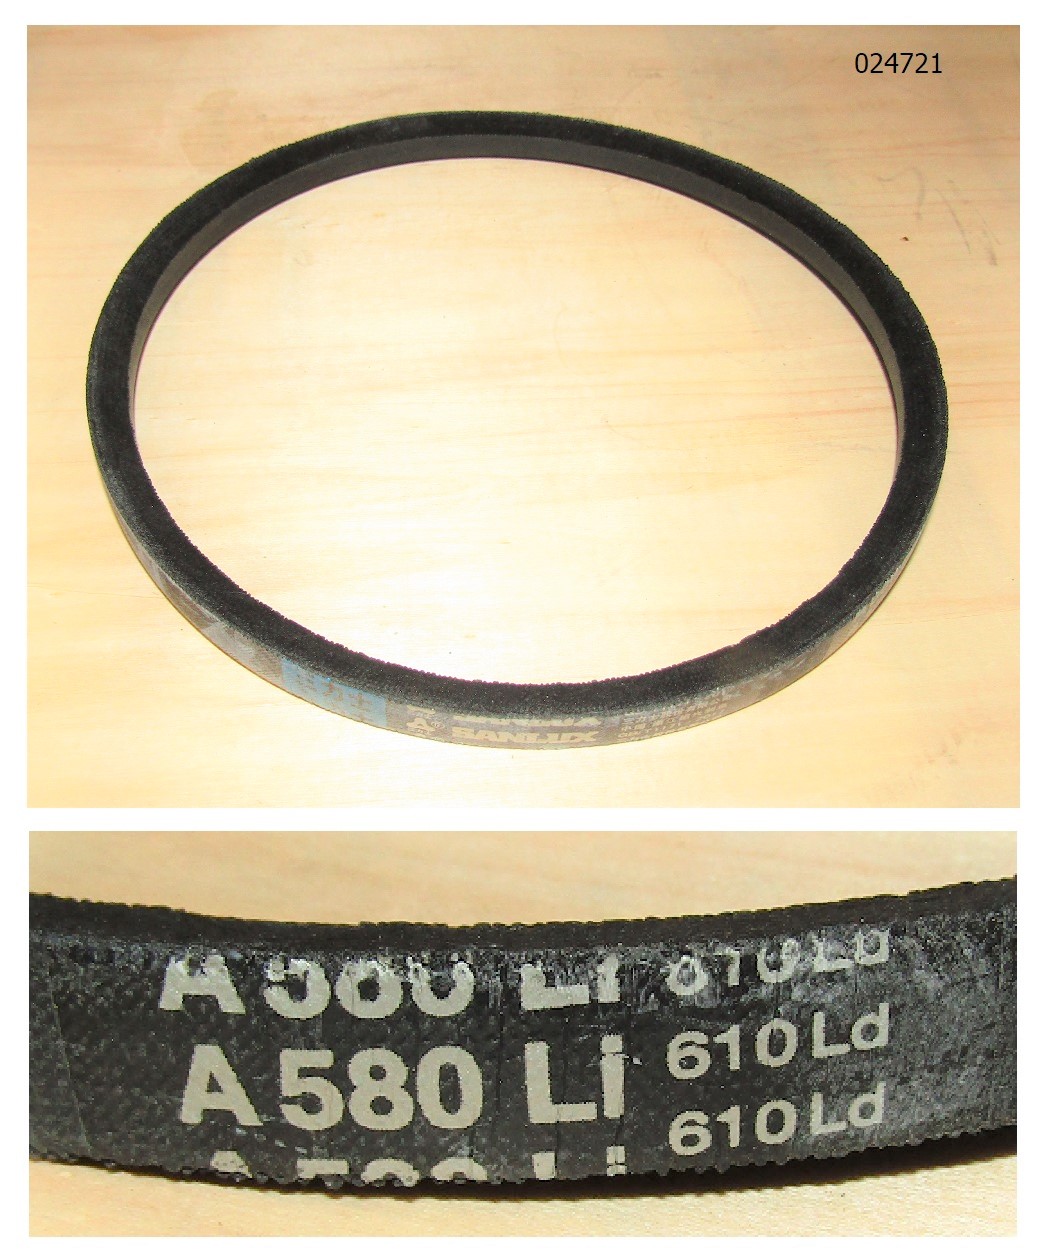 Ремень приводной гладкий (A580Li 610Ld) для TSS DMD600/DMR600L/V-Belt